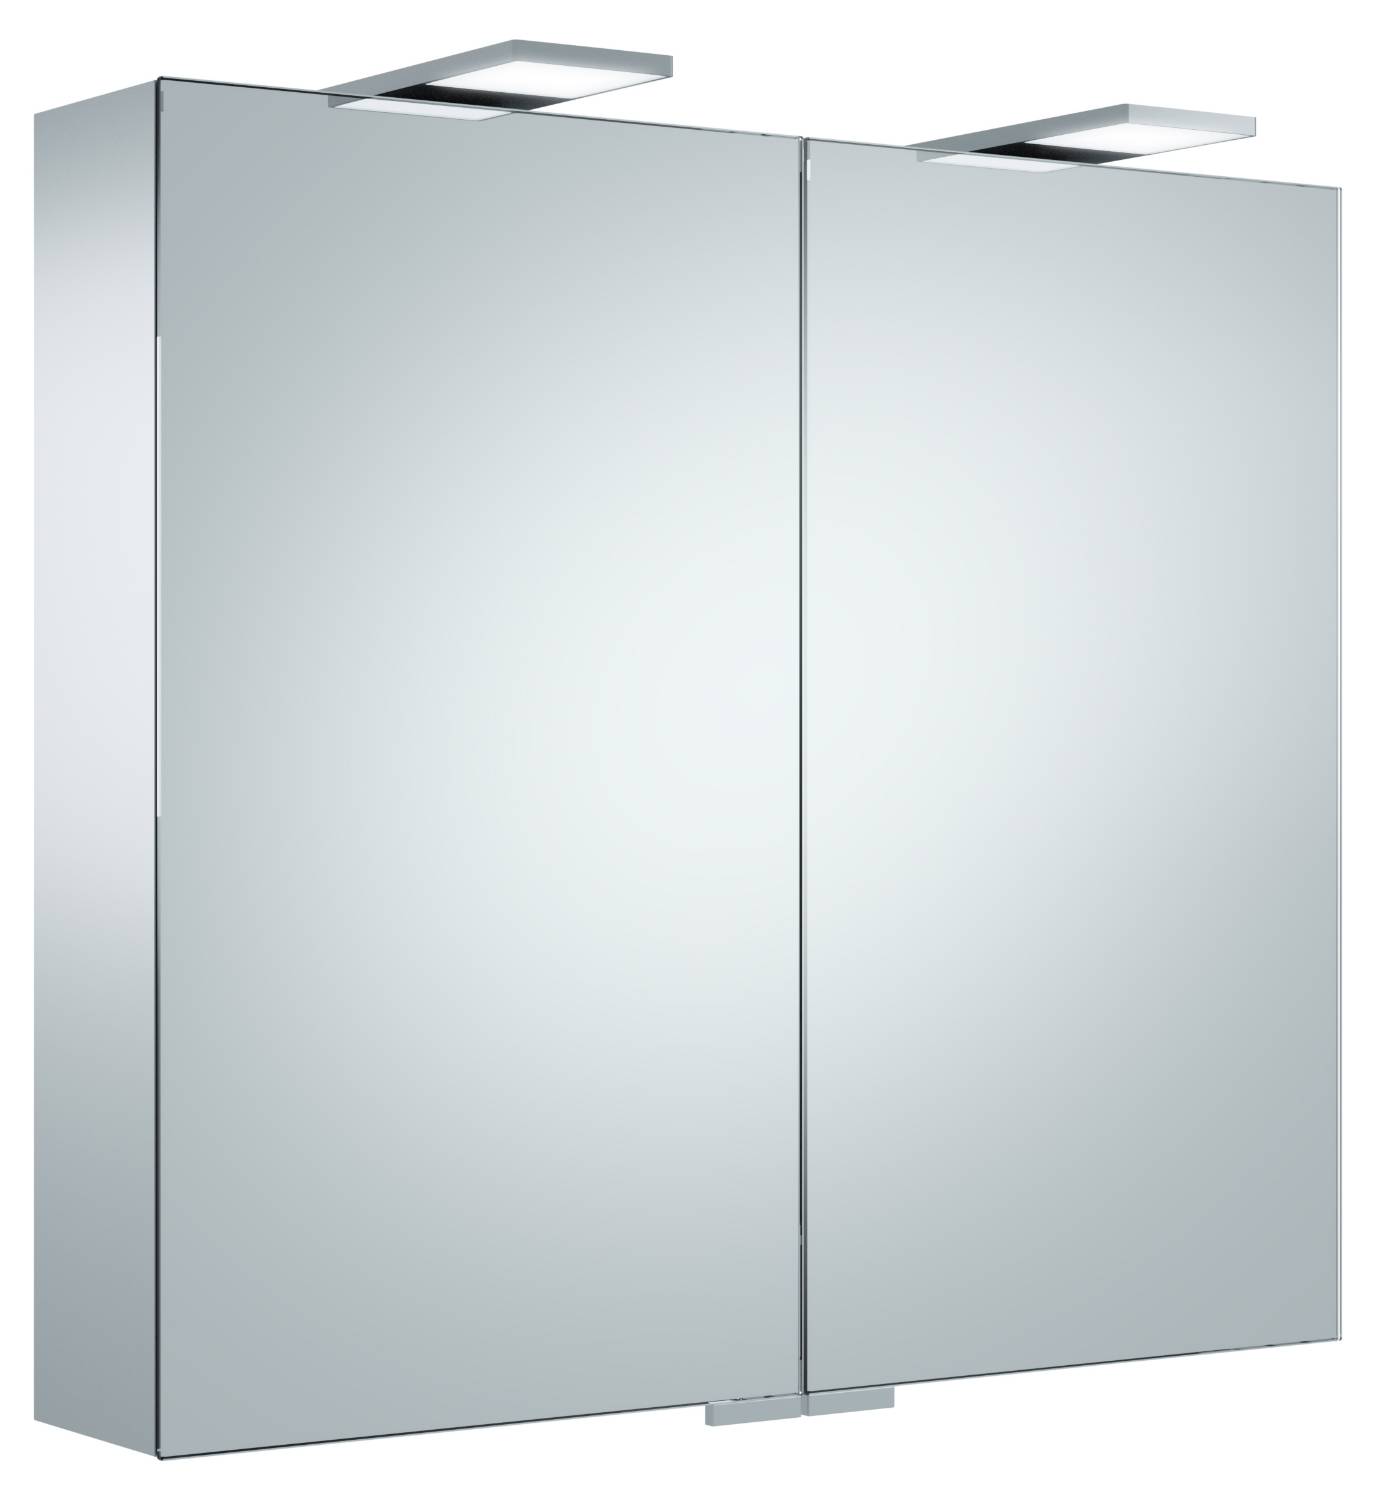 Bathroom Mirror Cabinet - (2 Door) with Lighting - Wall Mounted - ROYAL 15 - Mirror cabinet